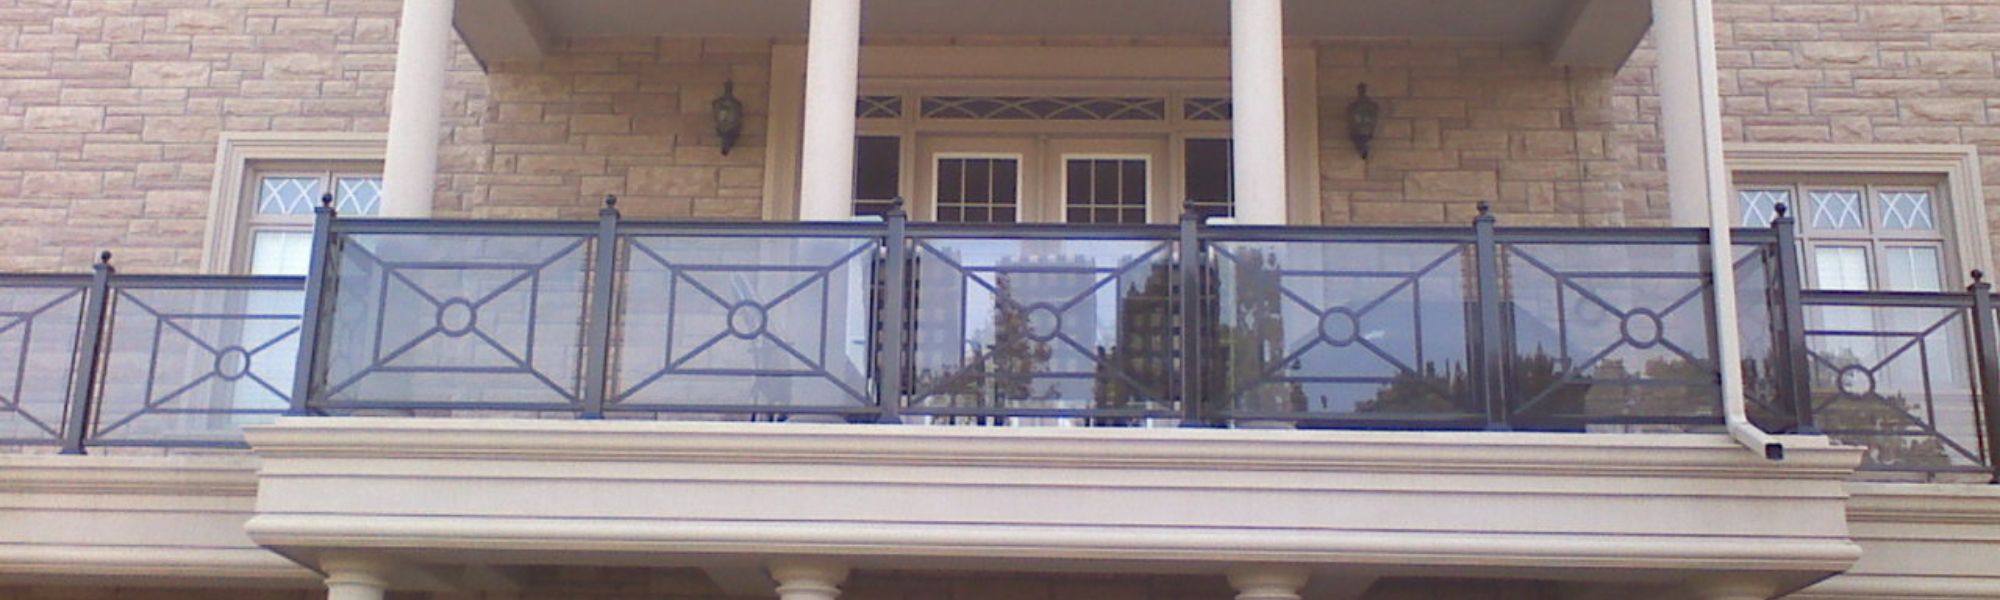 glass balcony railing ideas